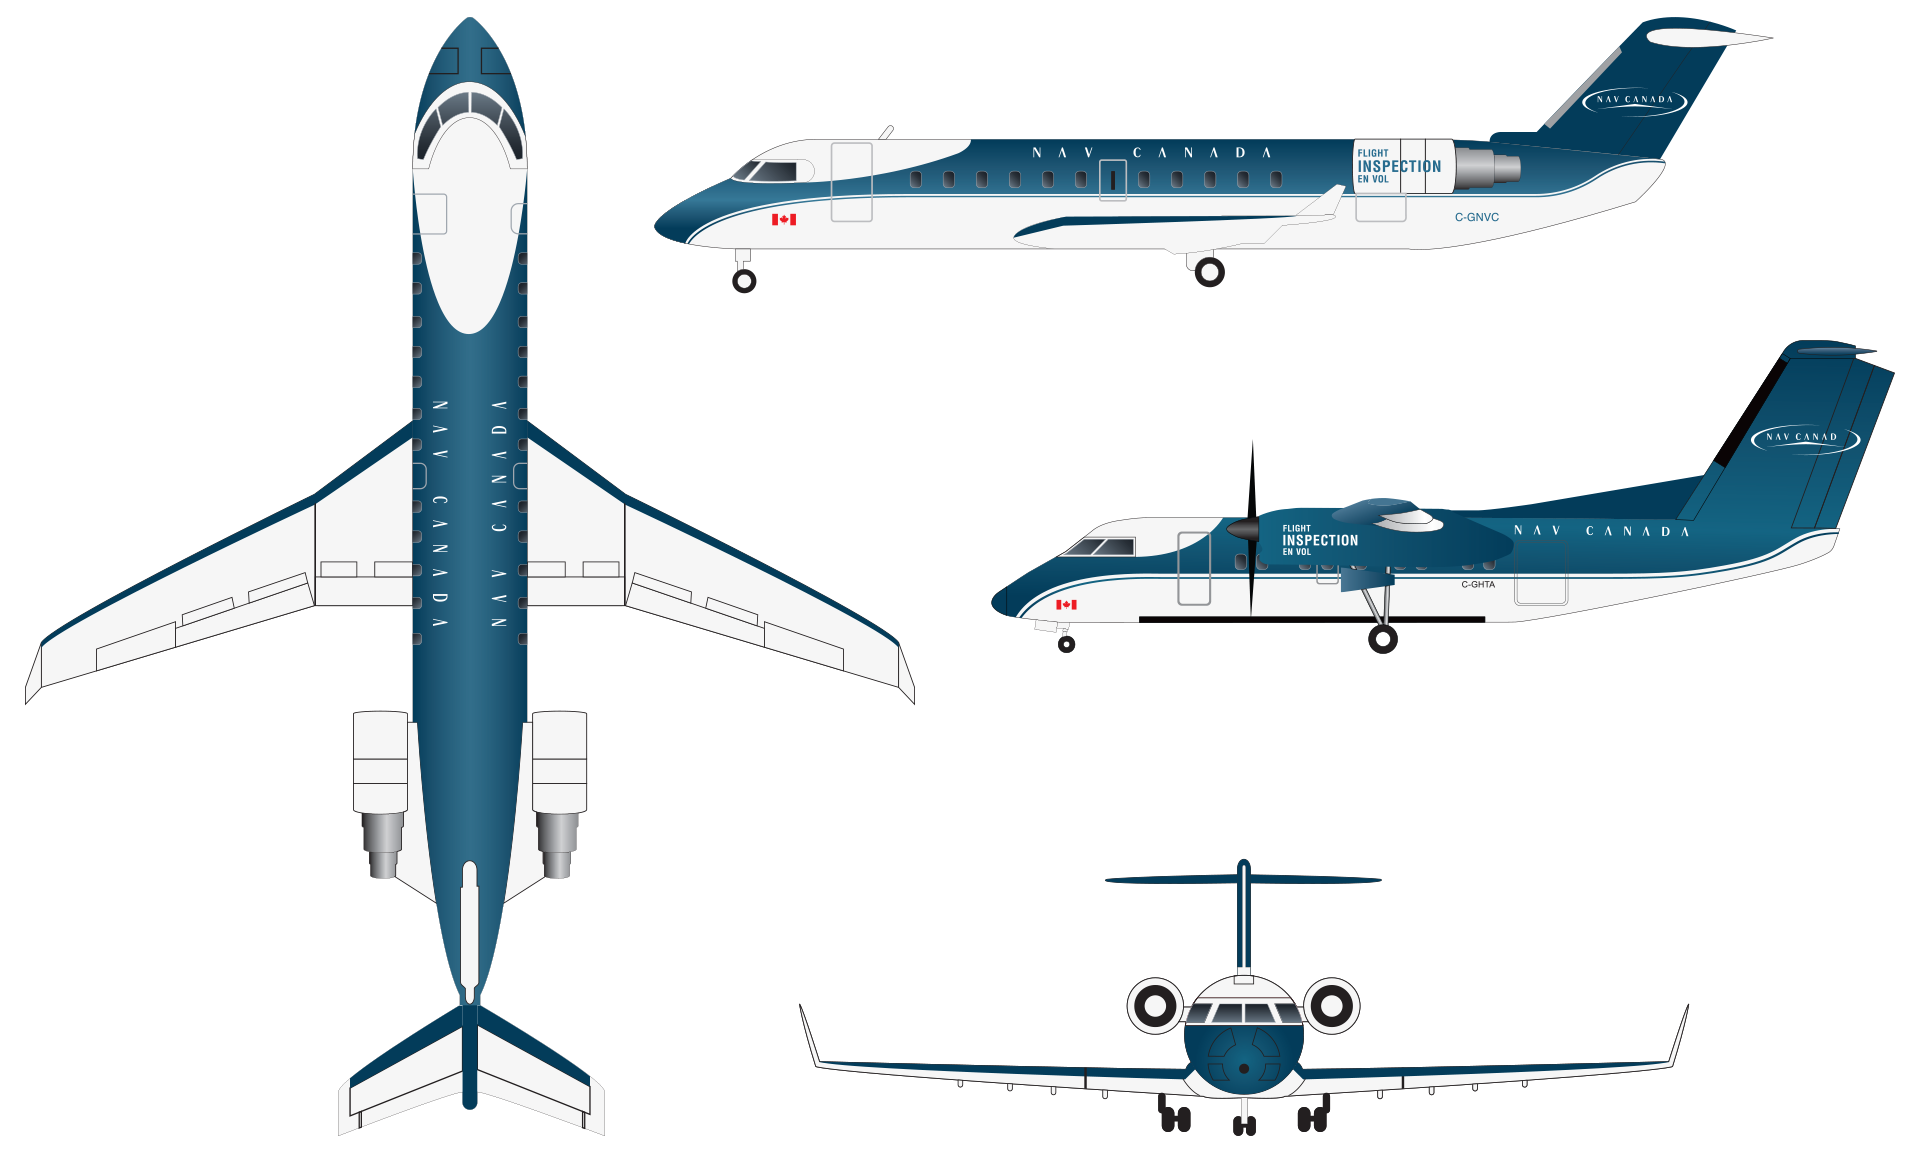 NC-plane design